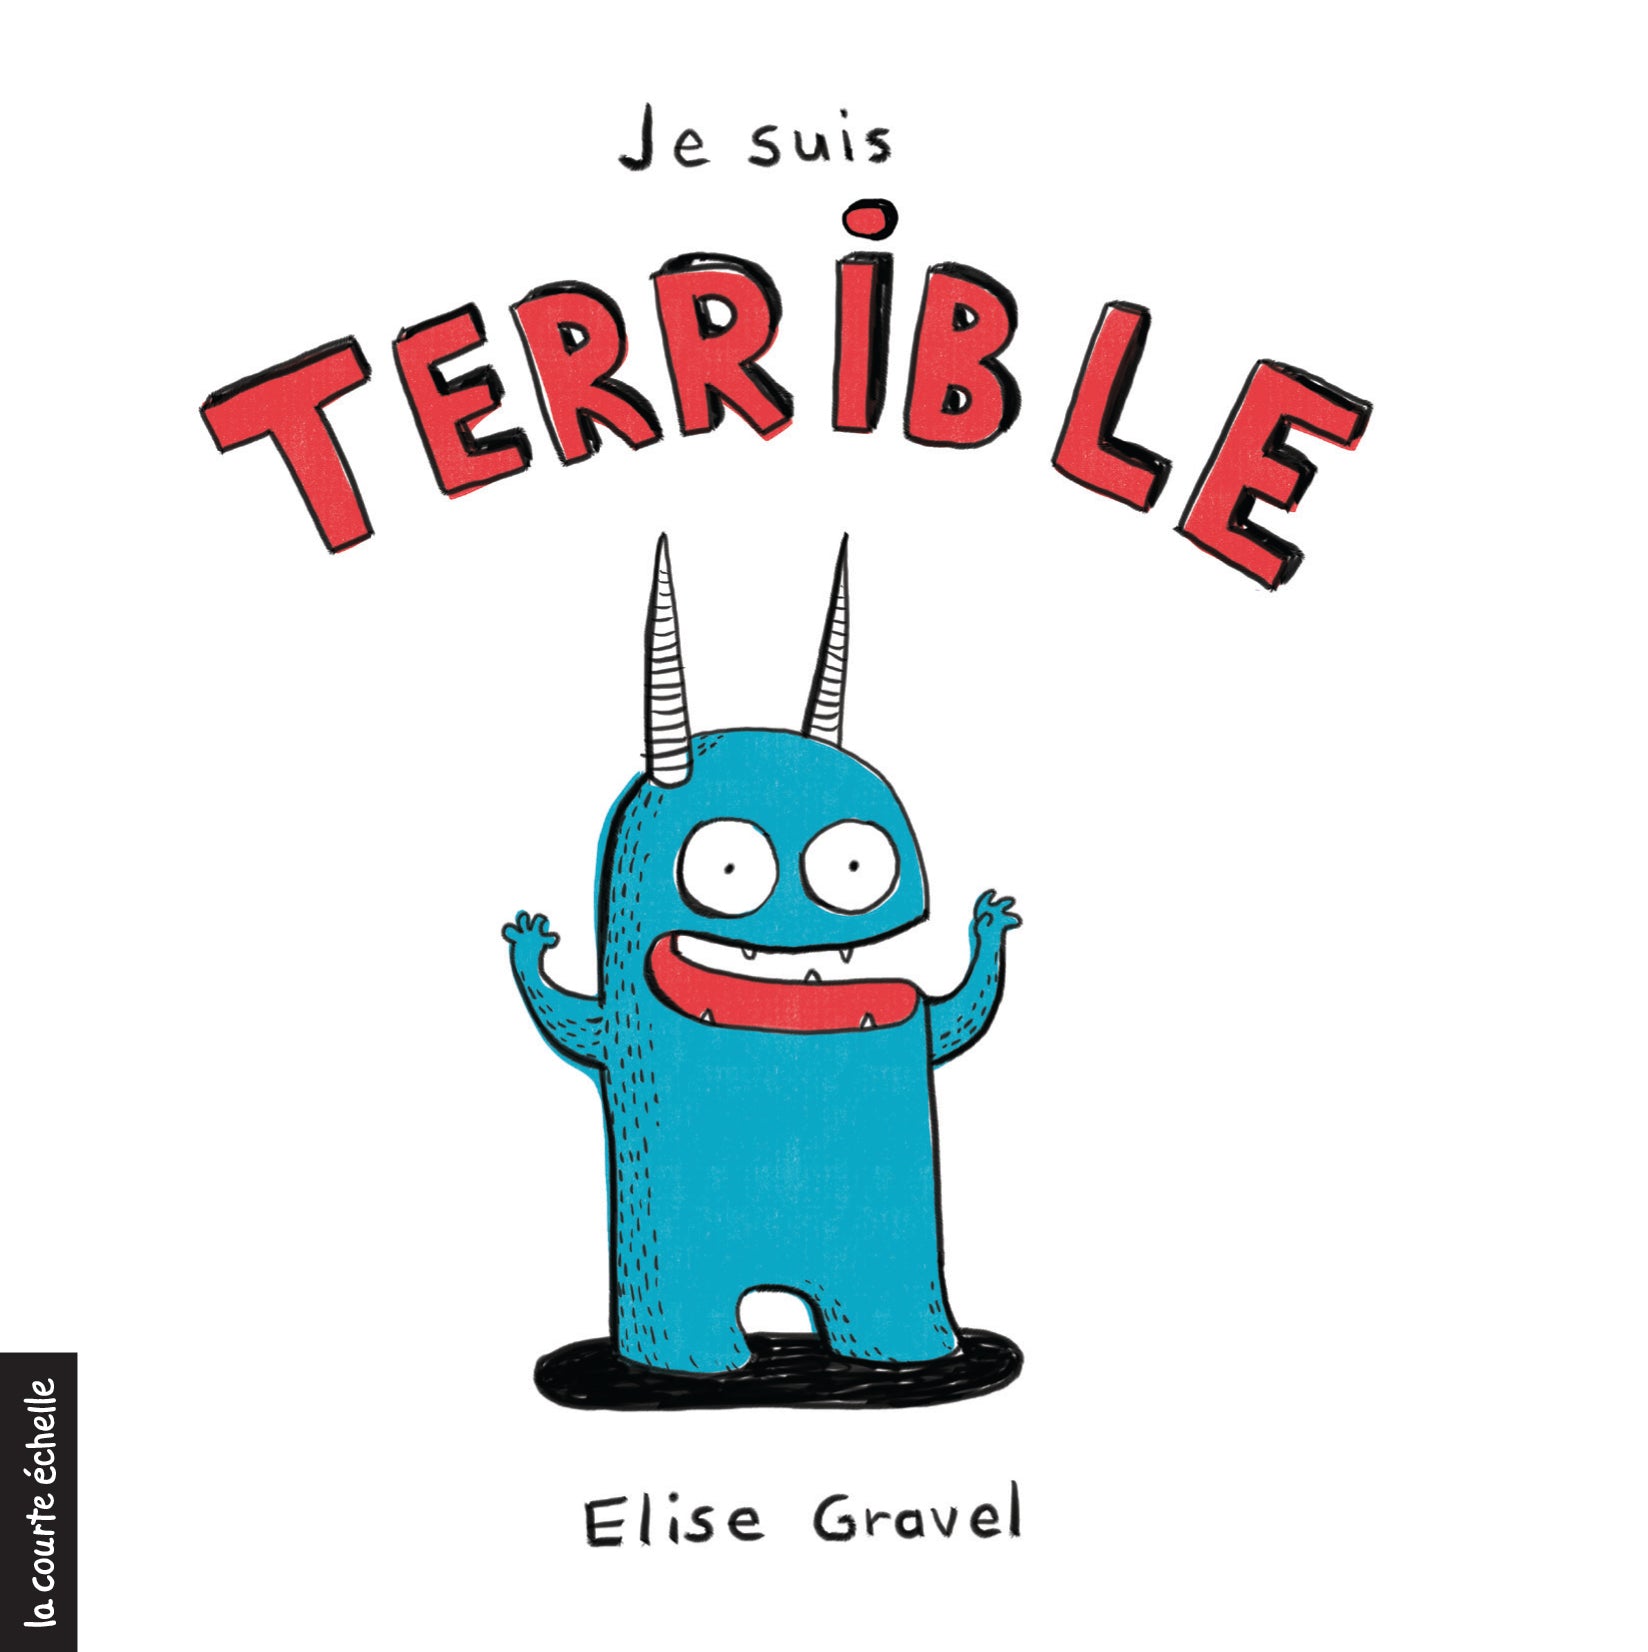 Book - Je suis terrible (Elise Gravel)